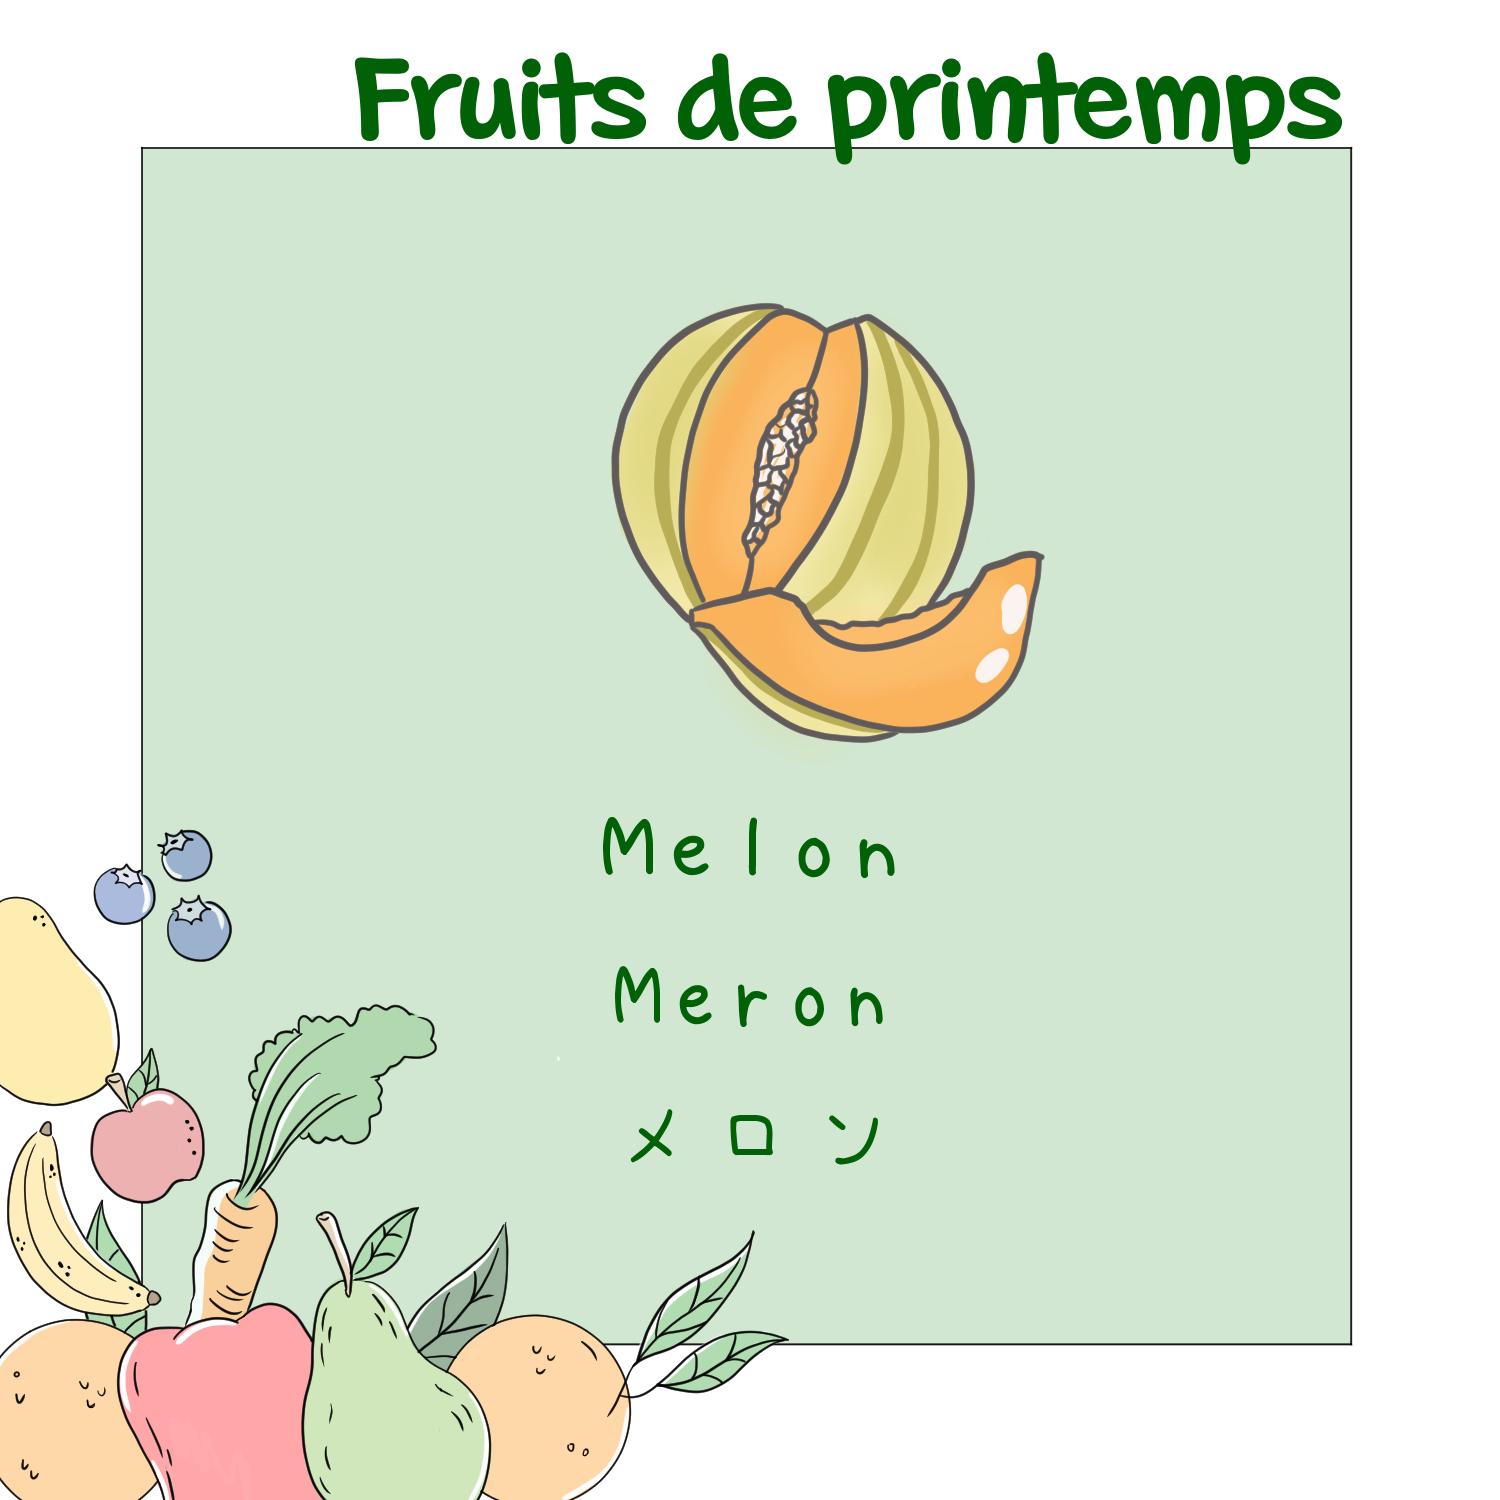 8) Melon